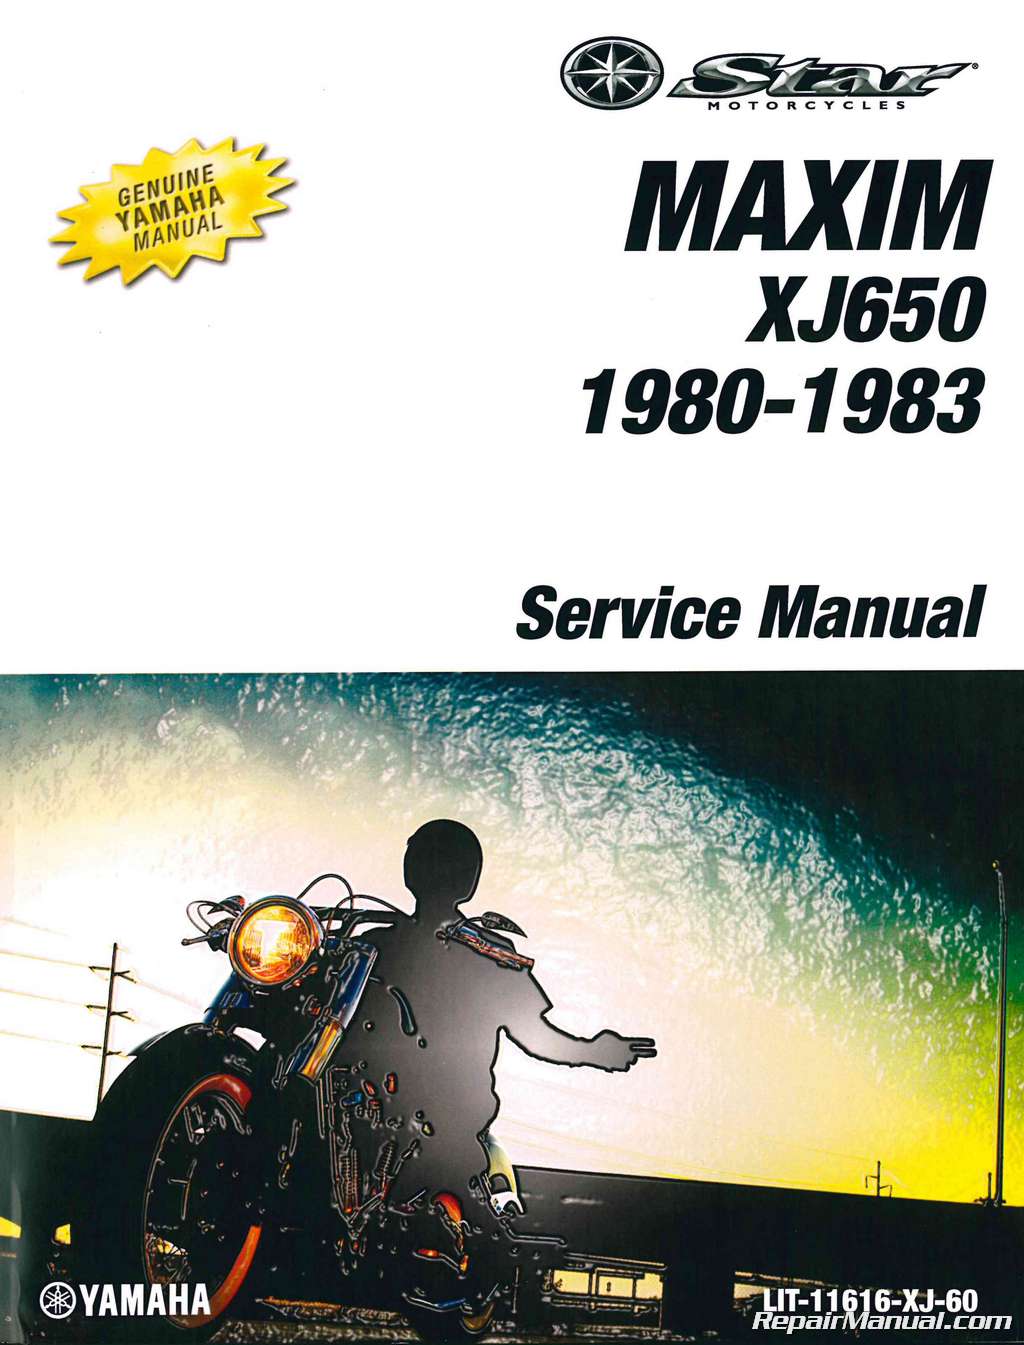 1982 yamaha maxim 650 service manual pdf